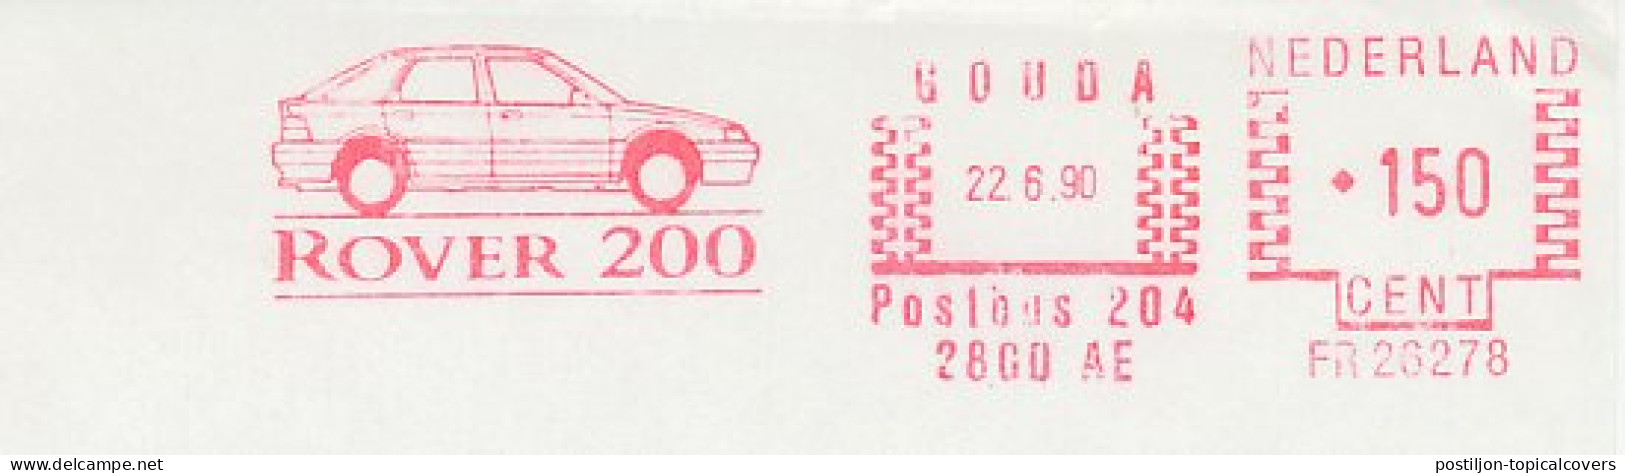 Meter Cut Netherlands 1990 Car - Rover 200 - Voitures